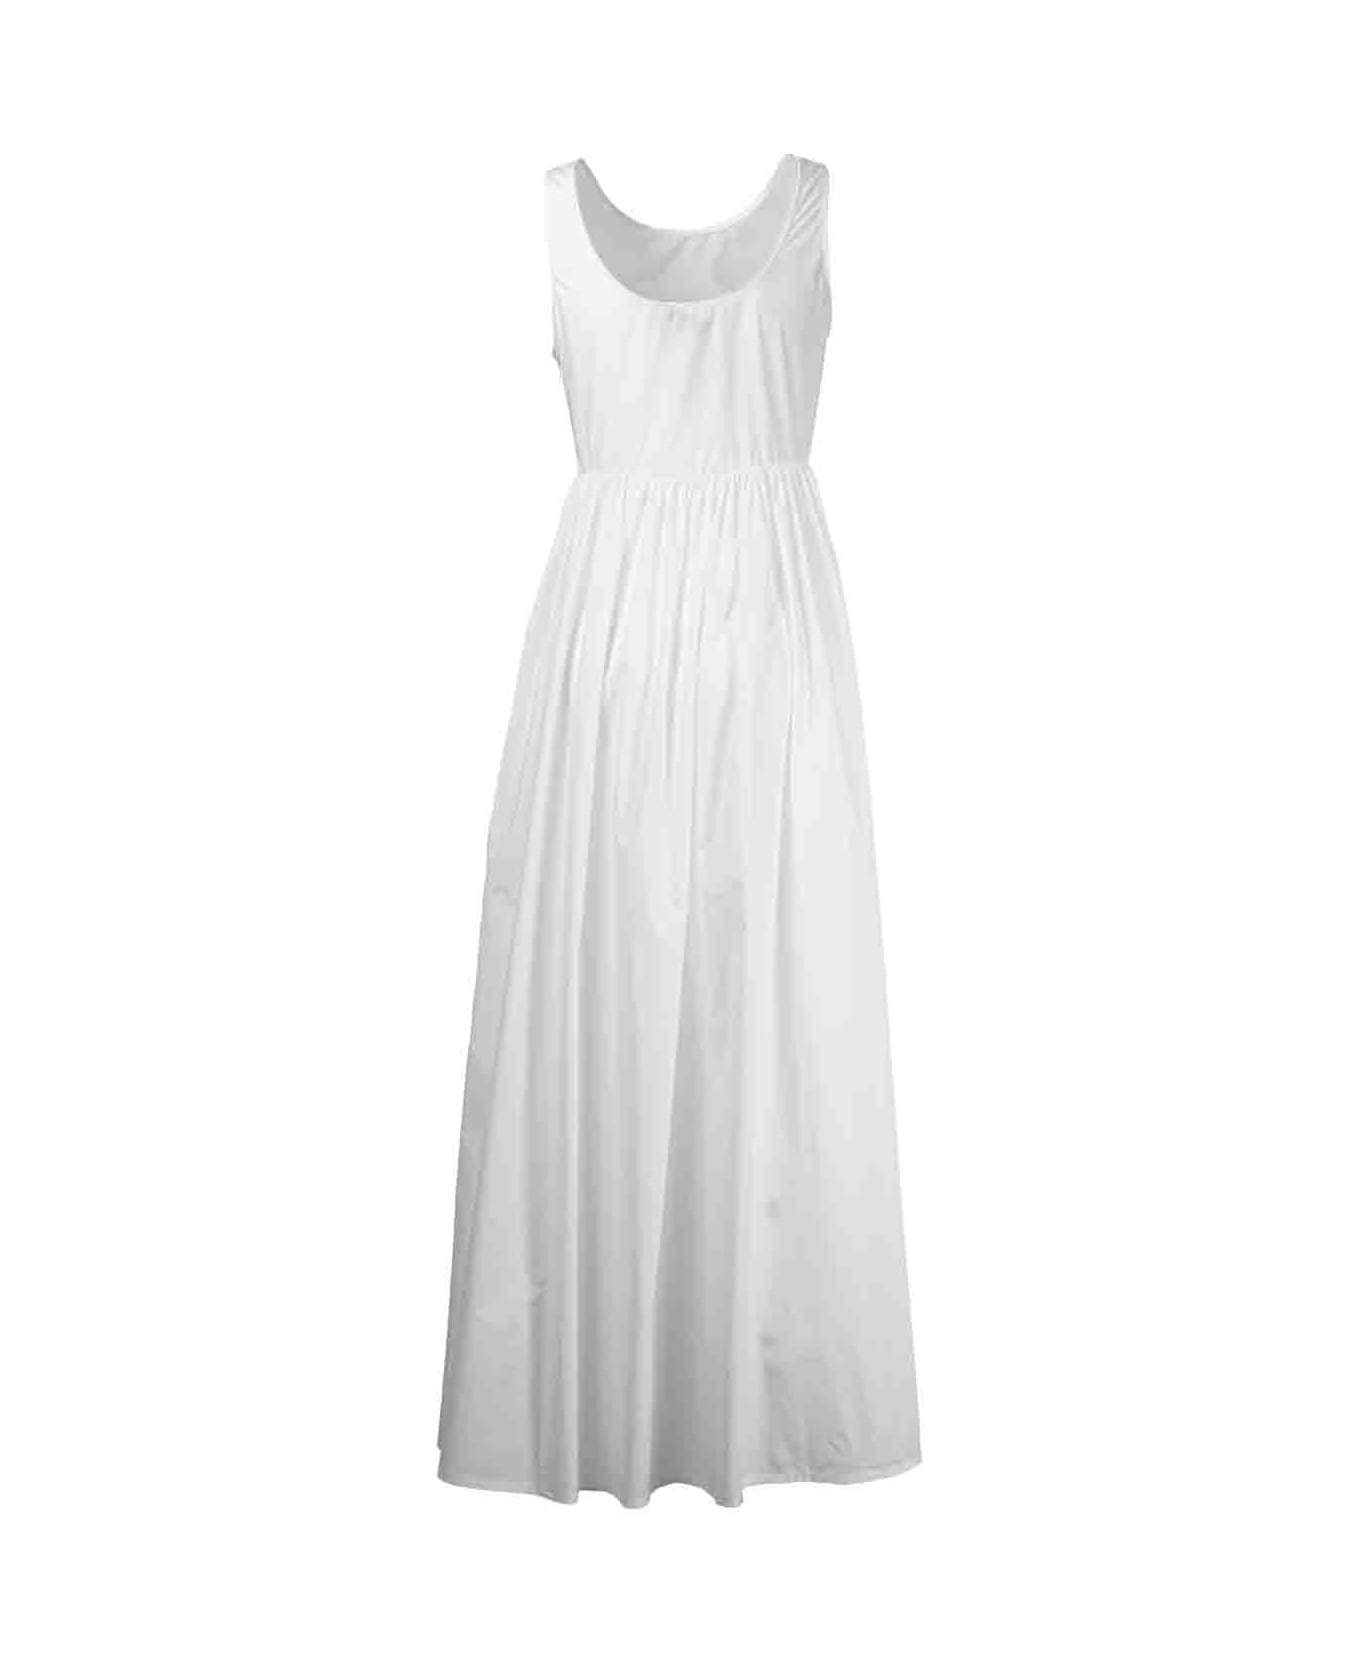 Emporio Armani Dresses White - White